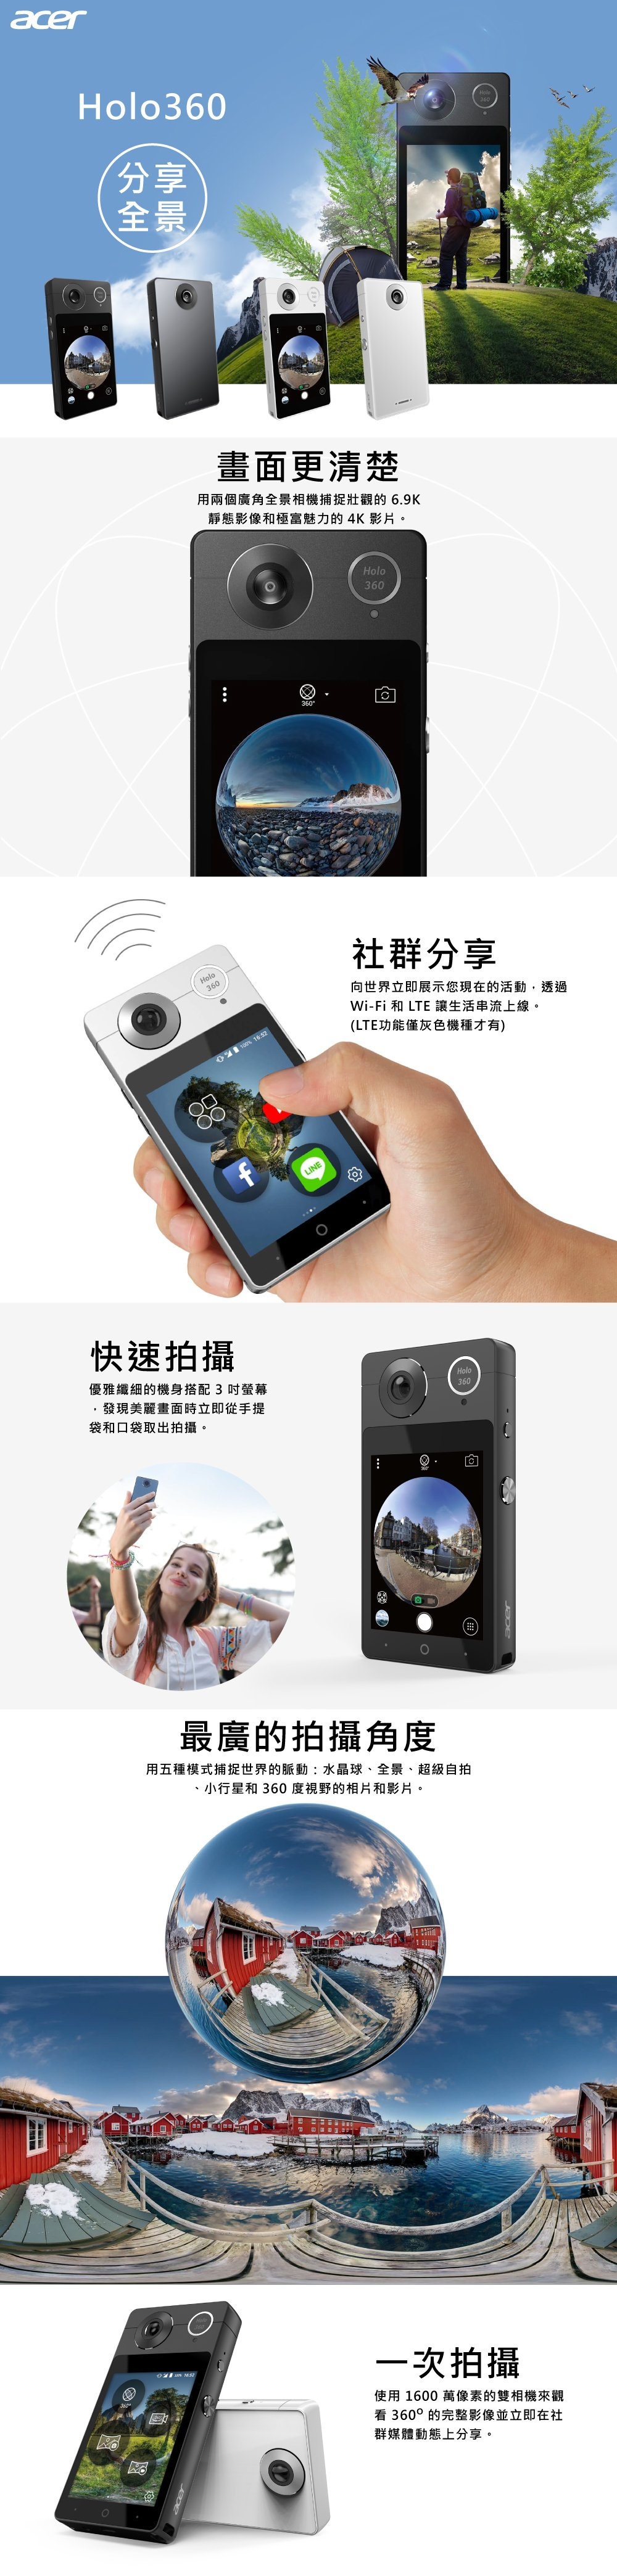 【WIFI版】ACER 宏碁 Holo 360 智慧攝影機 (3G/32G/附防水保護殼)